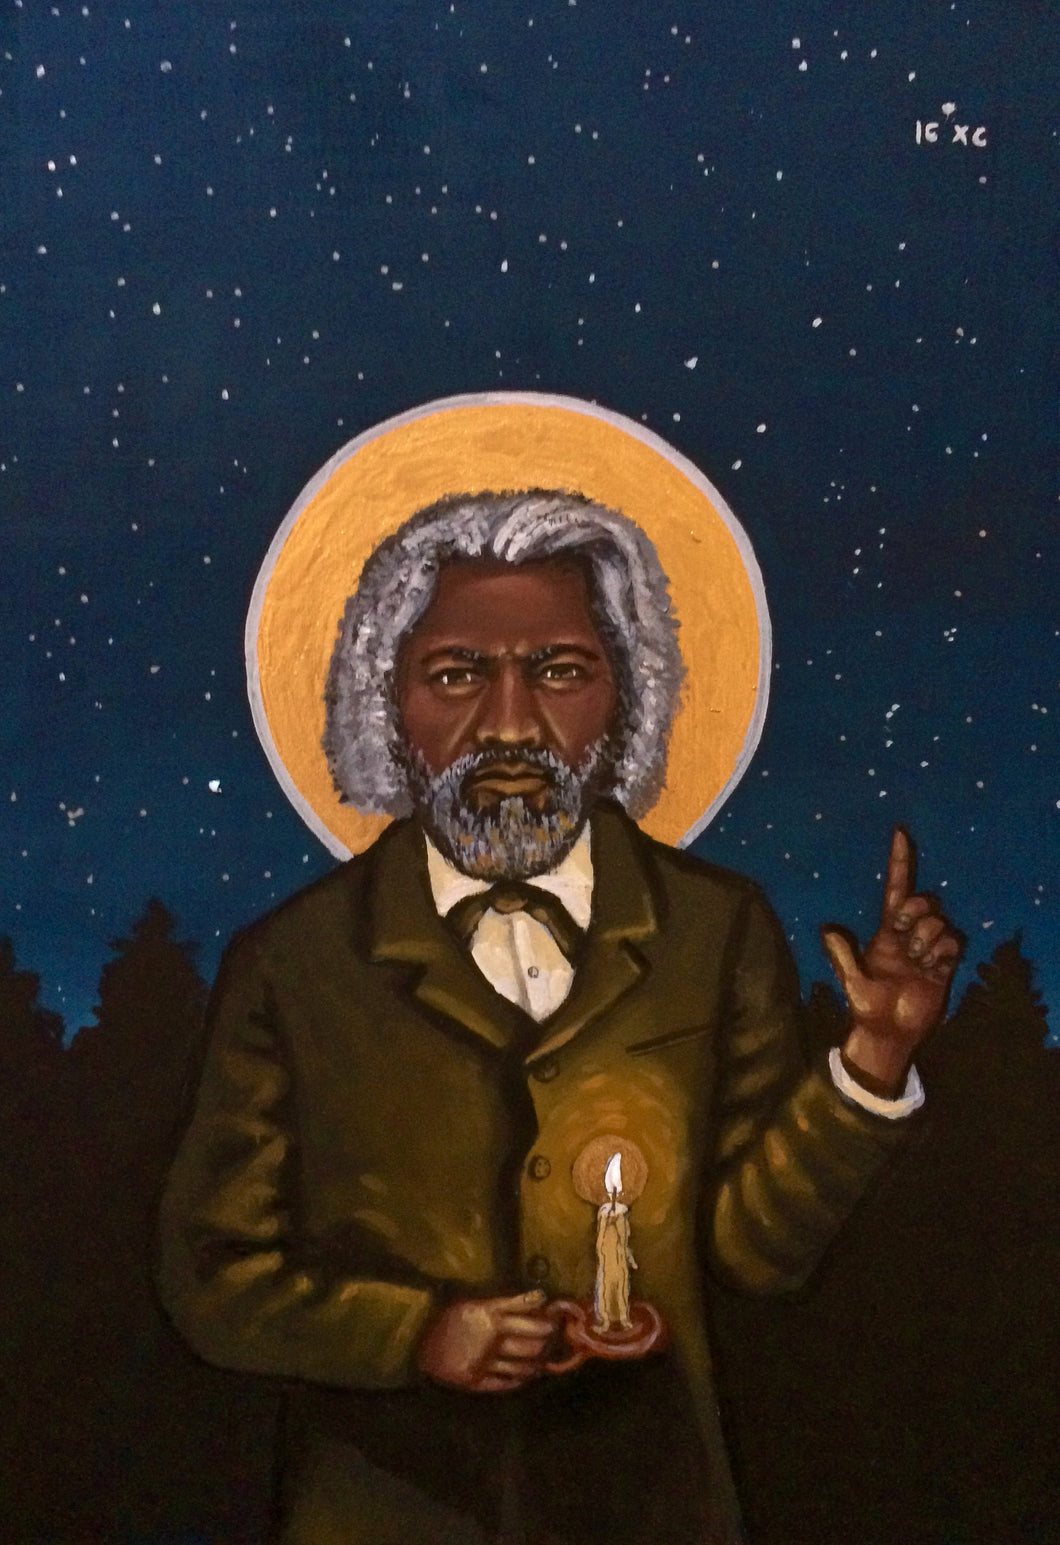 Frederick Douglass Digital Image